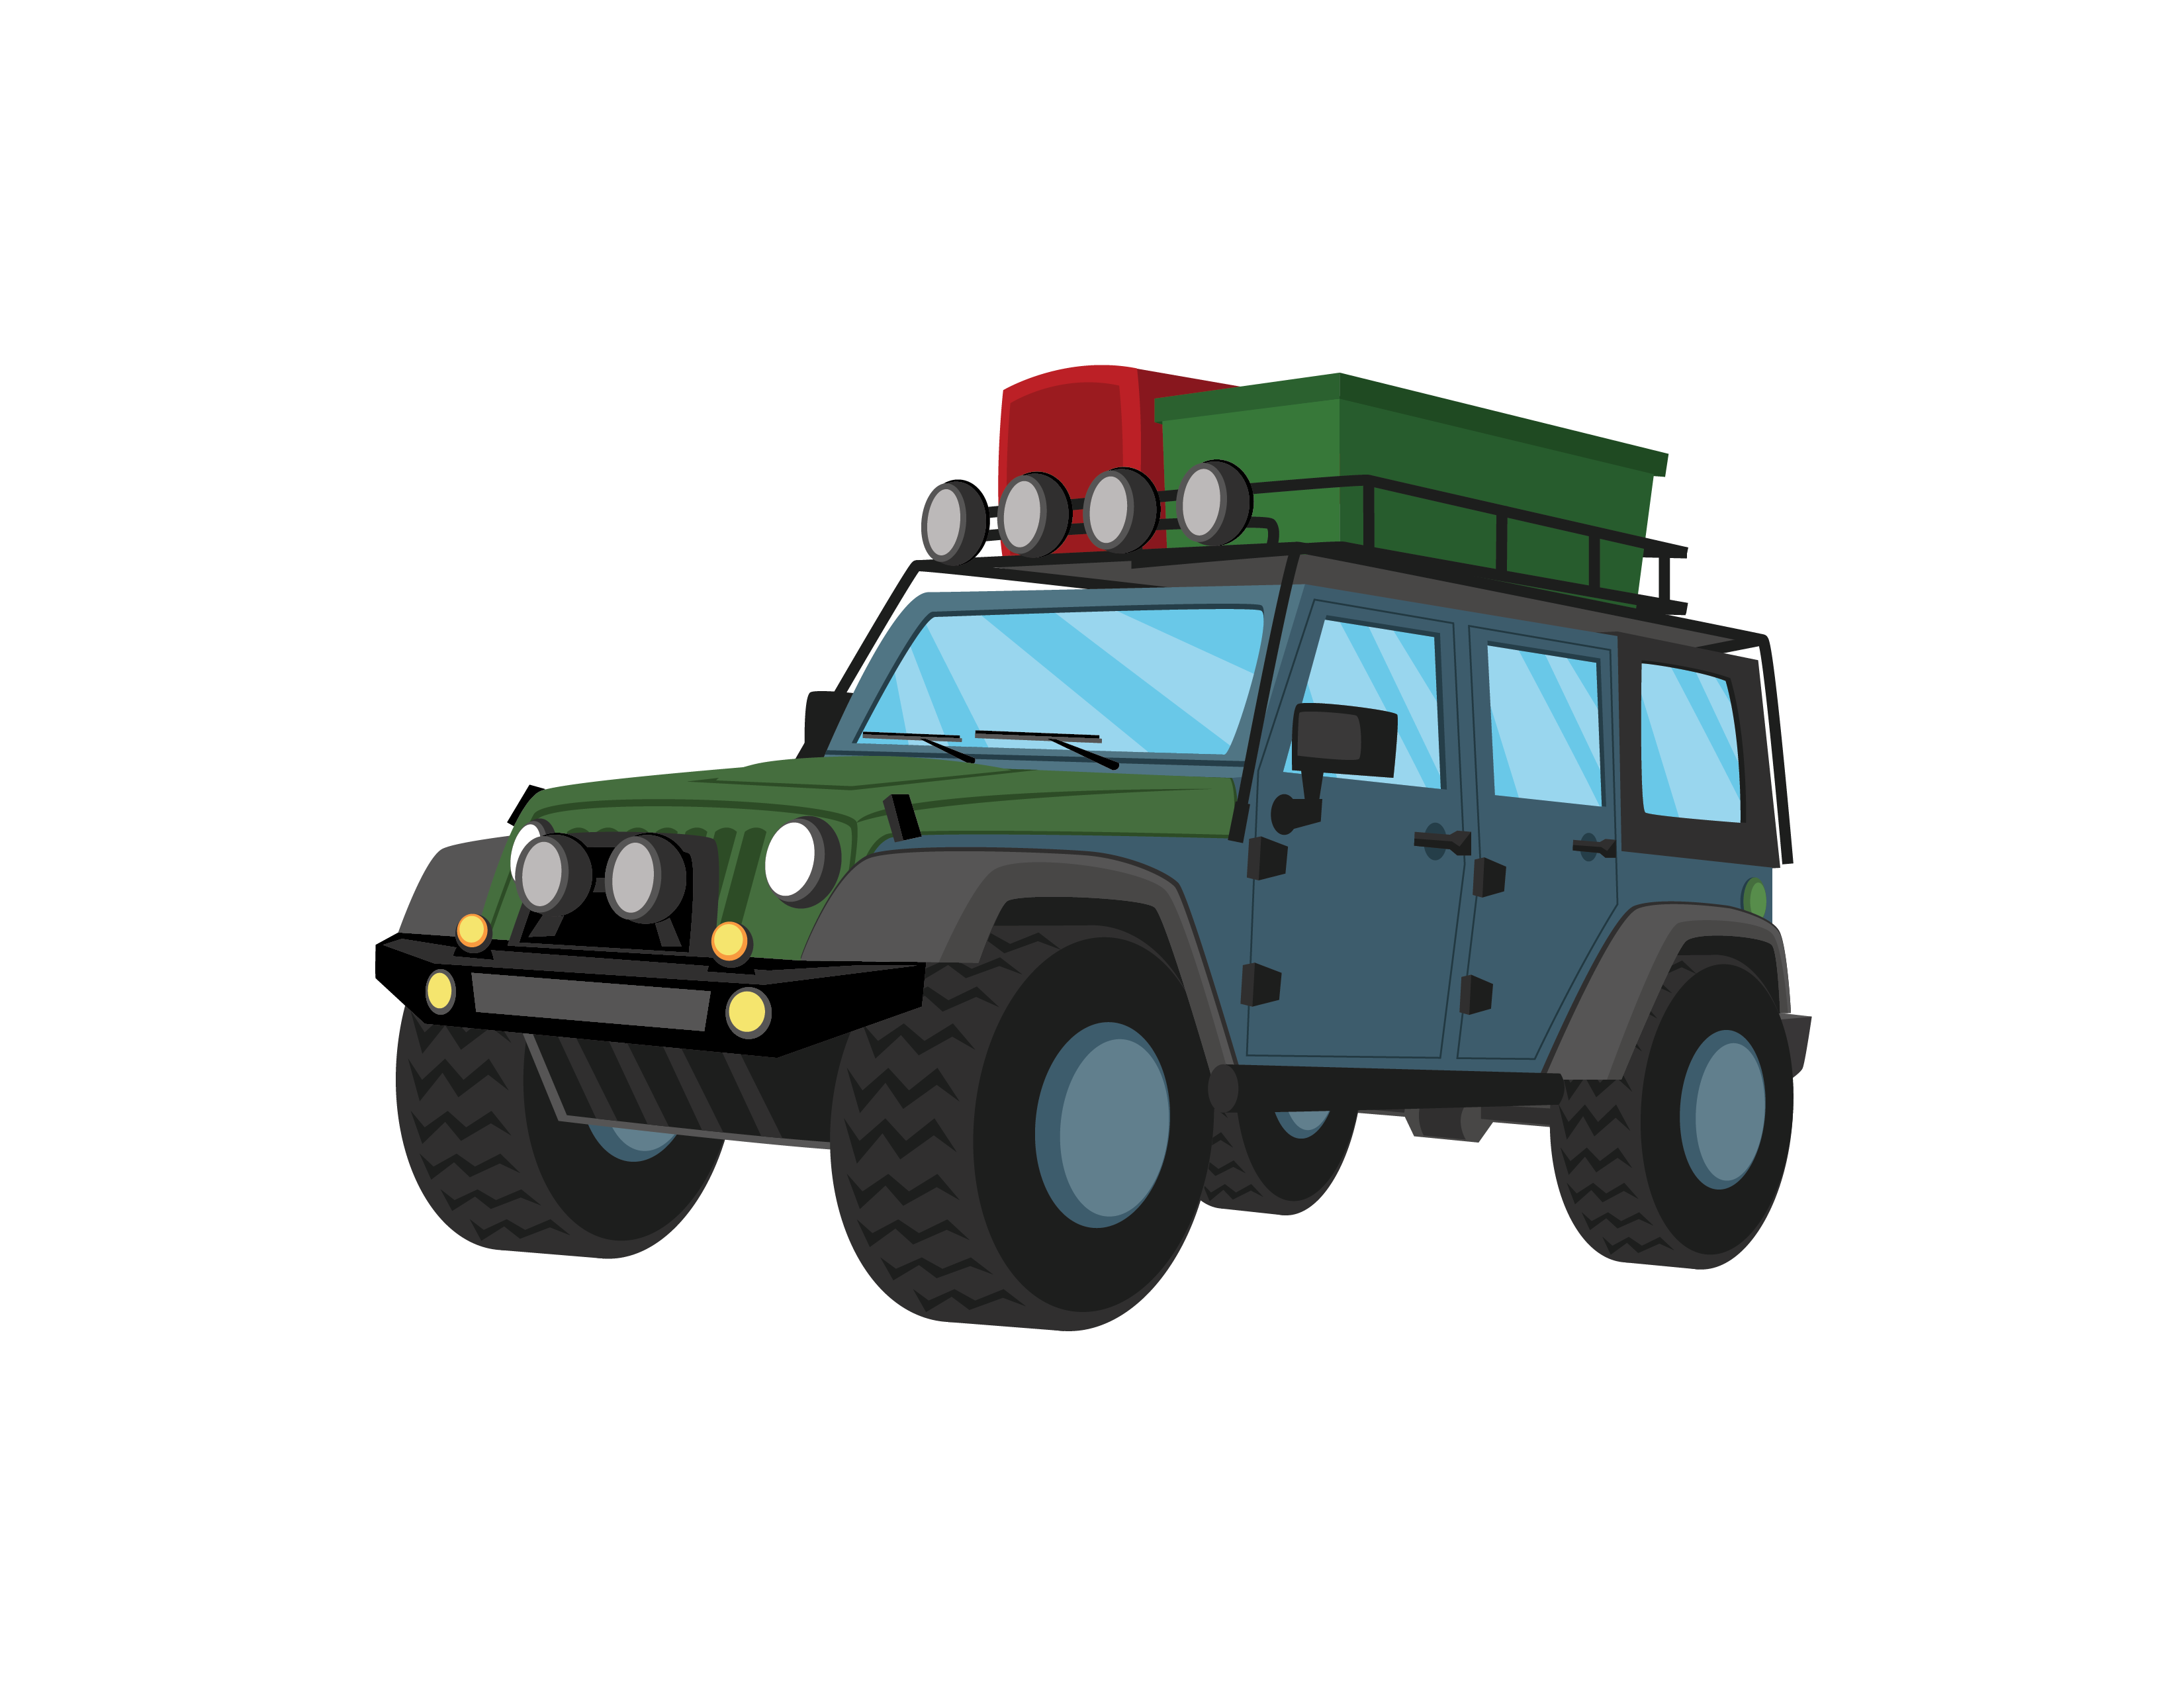 Jeep_side image